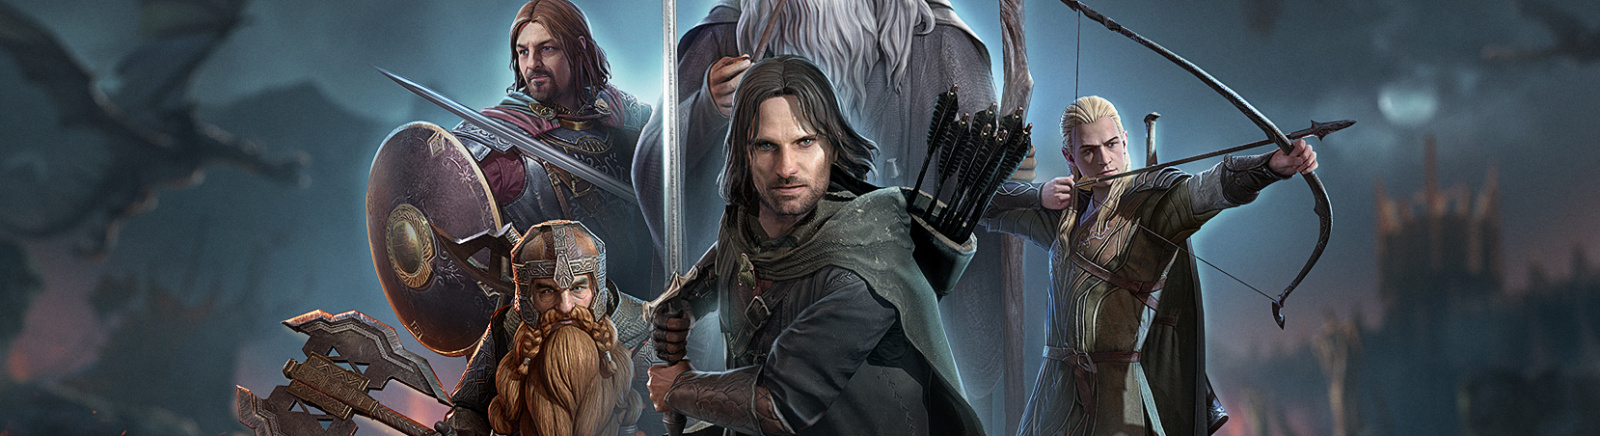 Дата выхода The Lord of the Rings: Rise to War  на iOS и Android в России и во всем мире